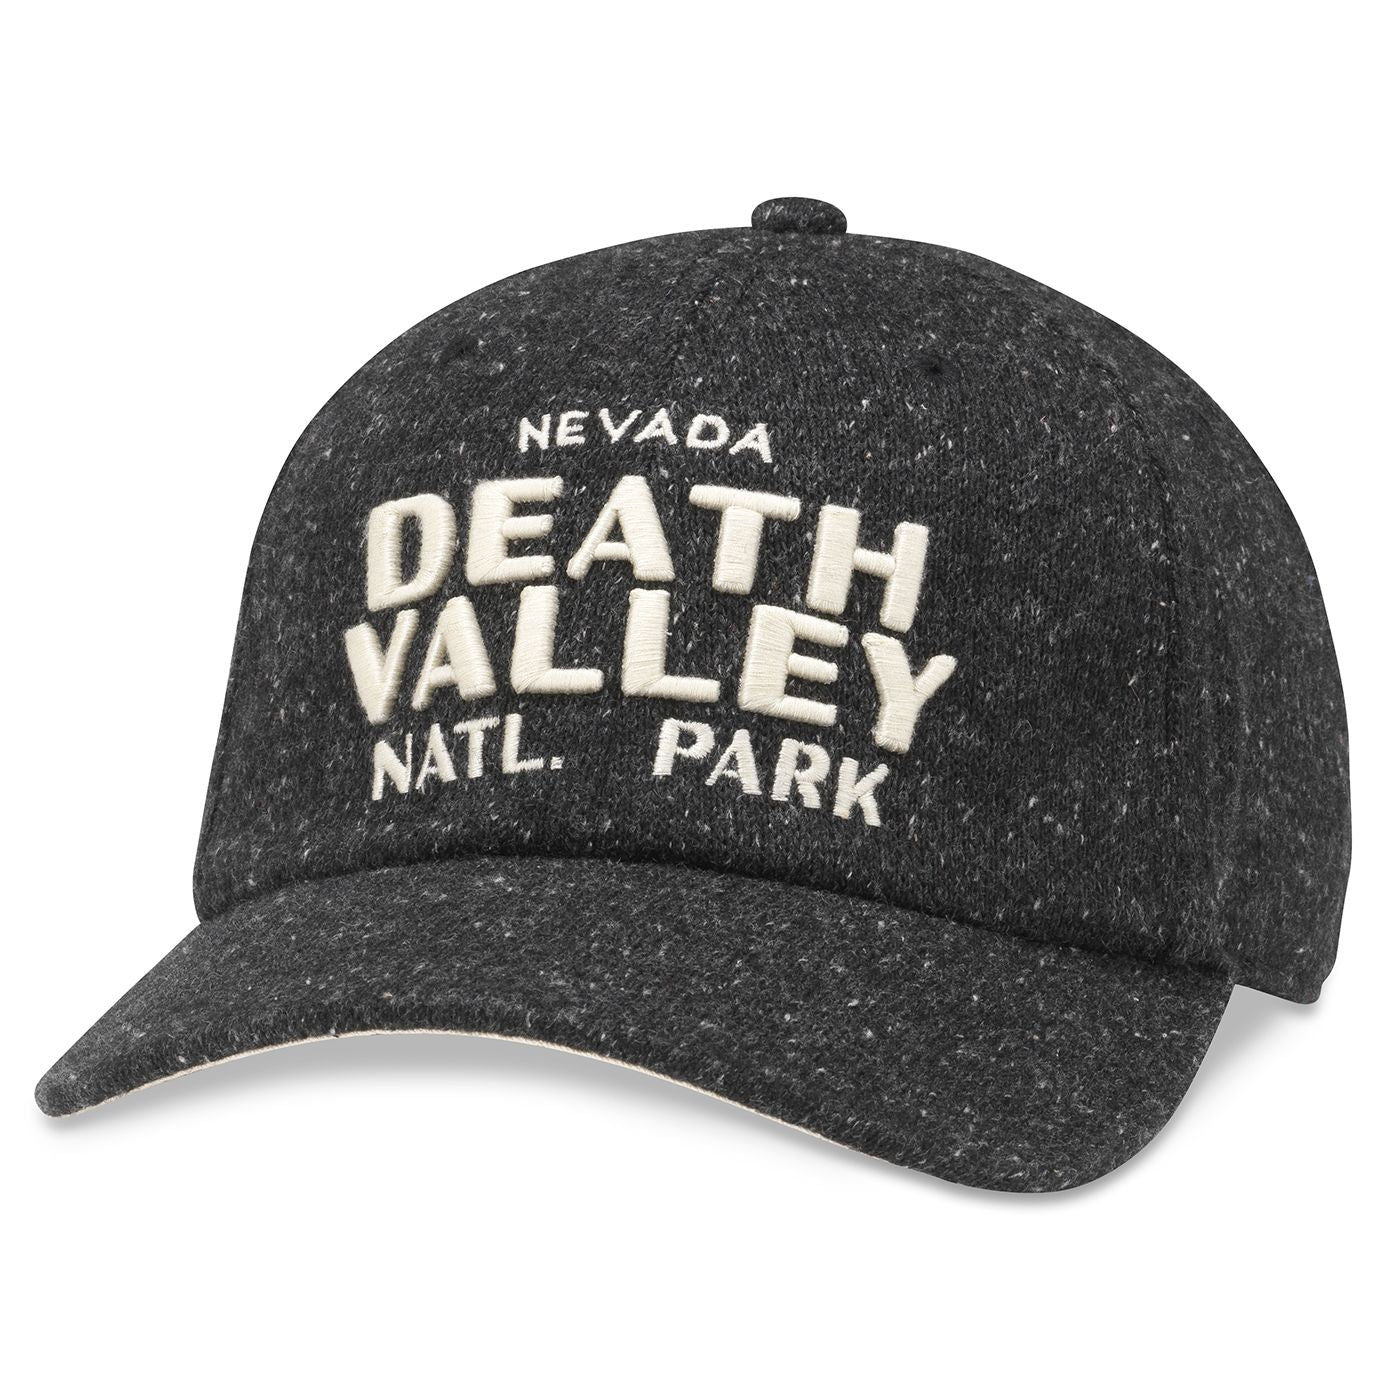 DEATH VALLEY NATIONAL PARK Hat